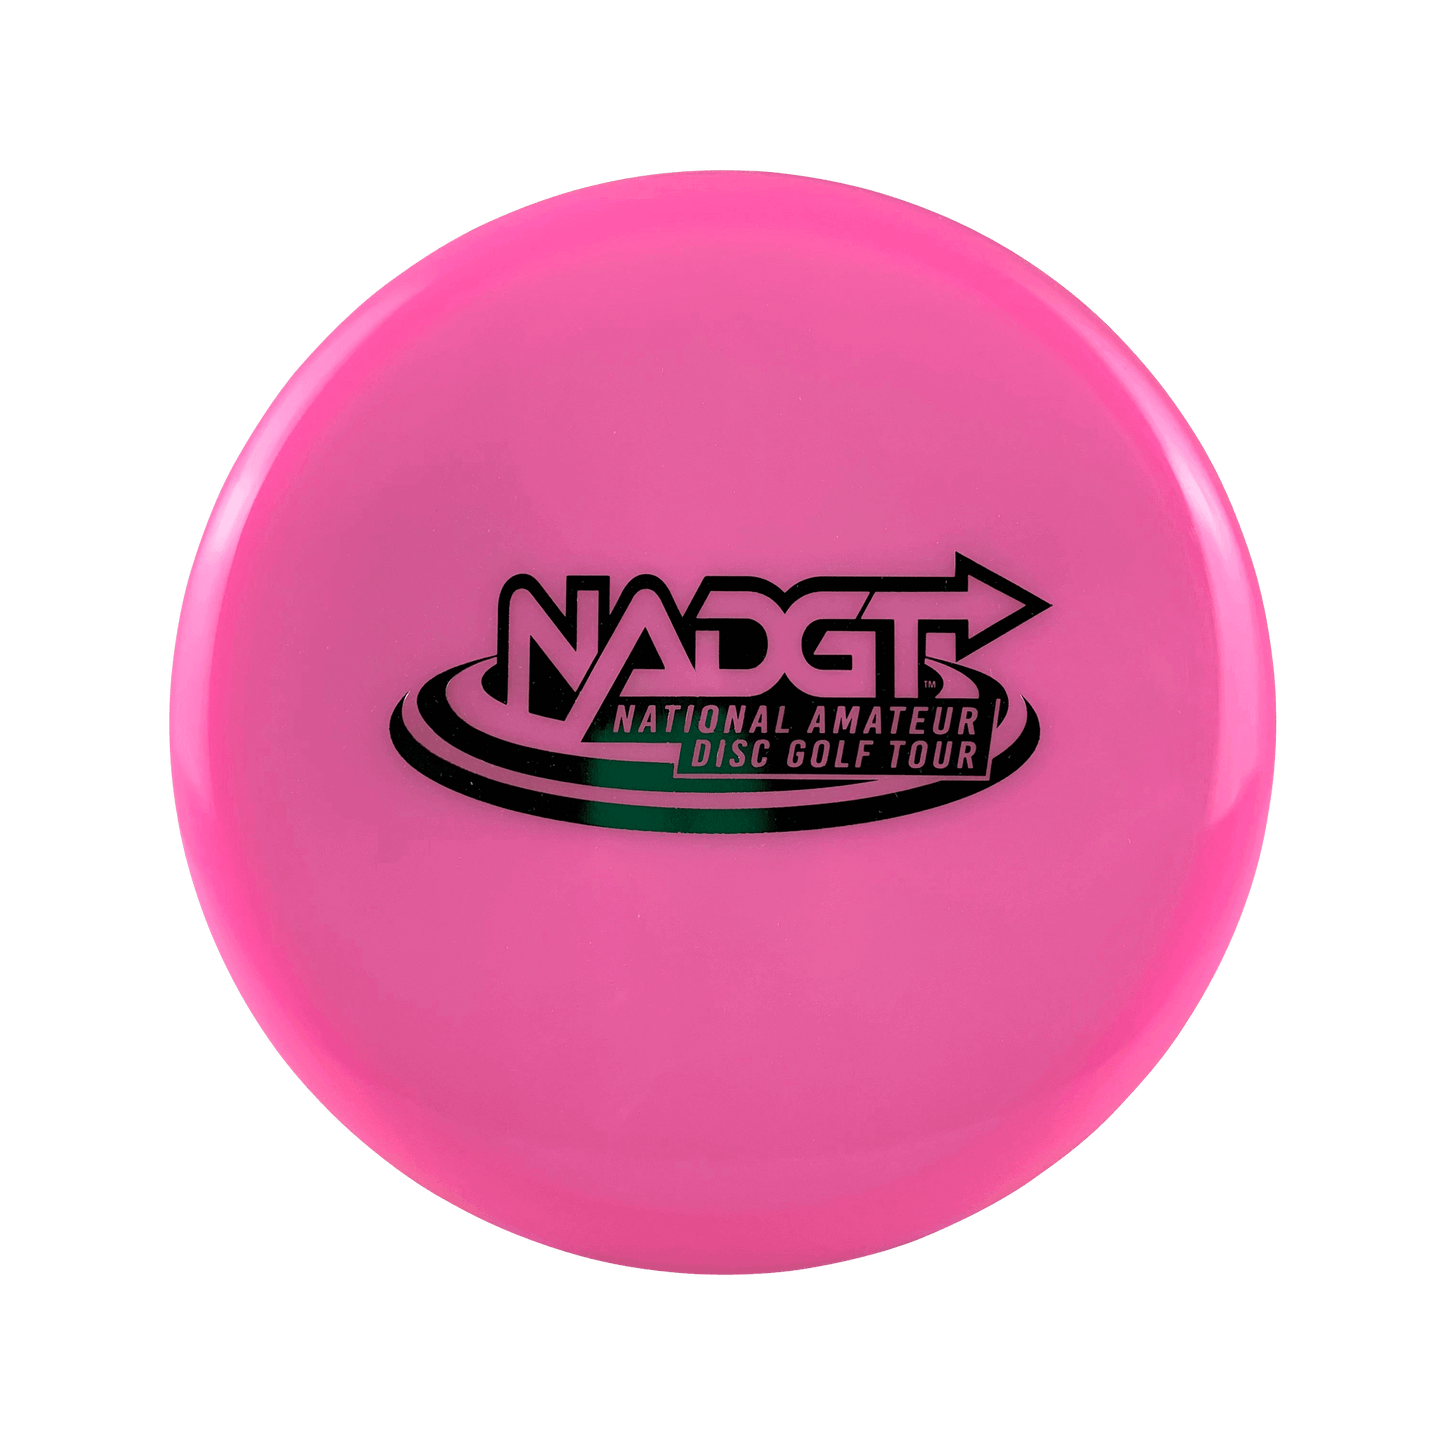 Neo Origin - NADGT Stamp Disc Discmania pink 177 